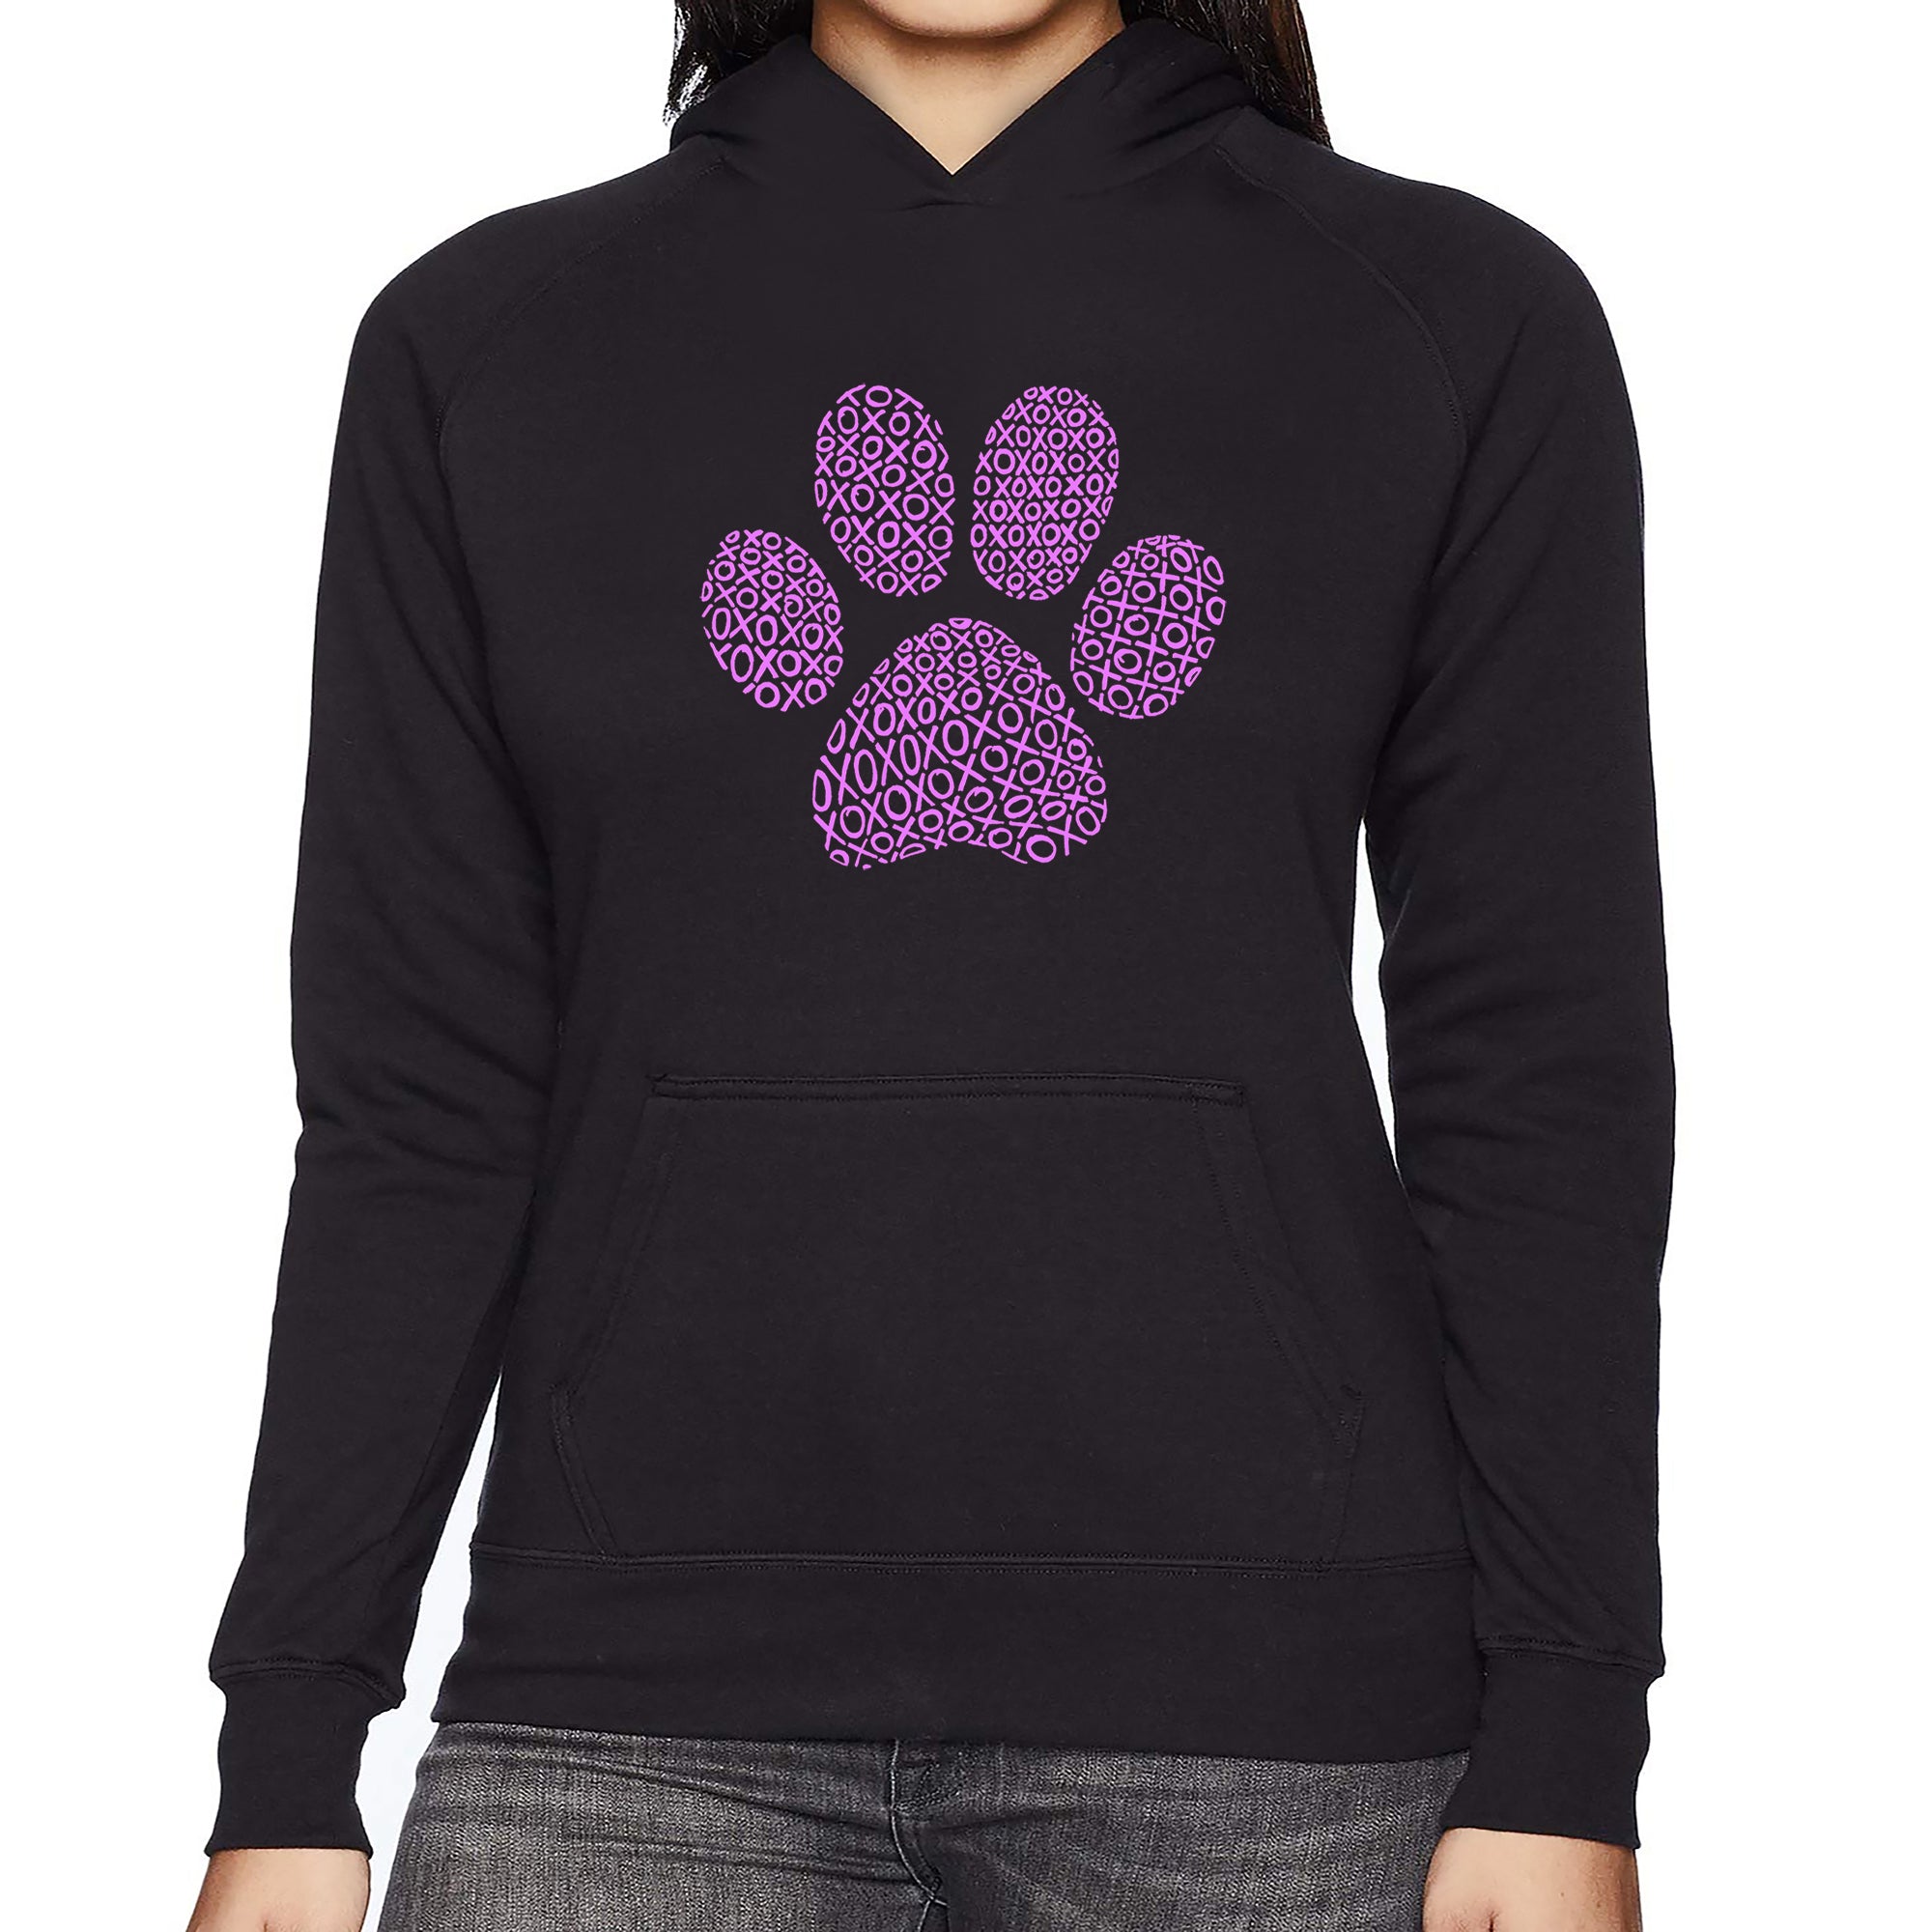 XOXO Dog Paw - Women's Word Art Hooded Sweatshirt - Black - Large